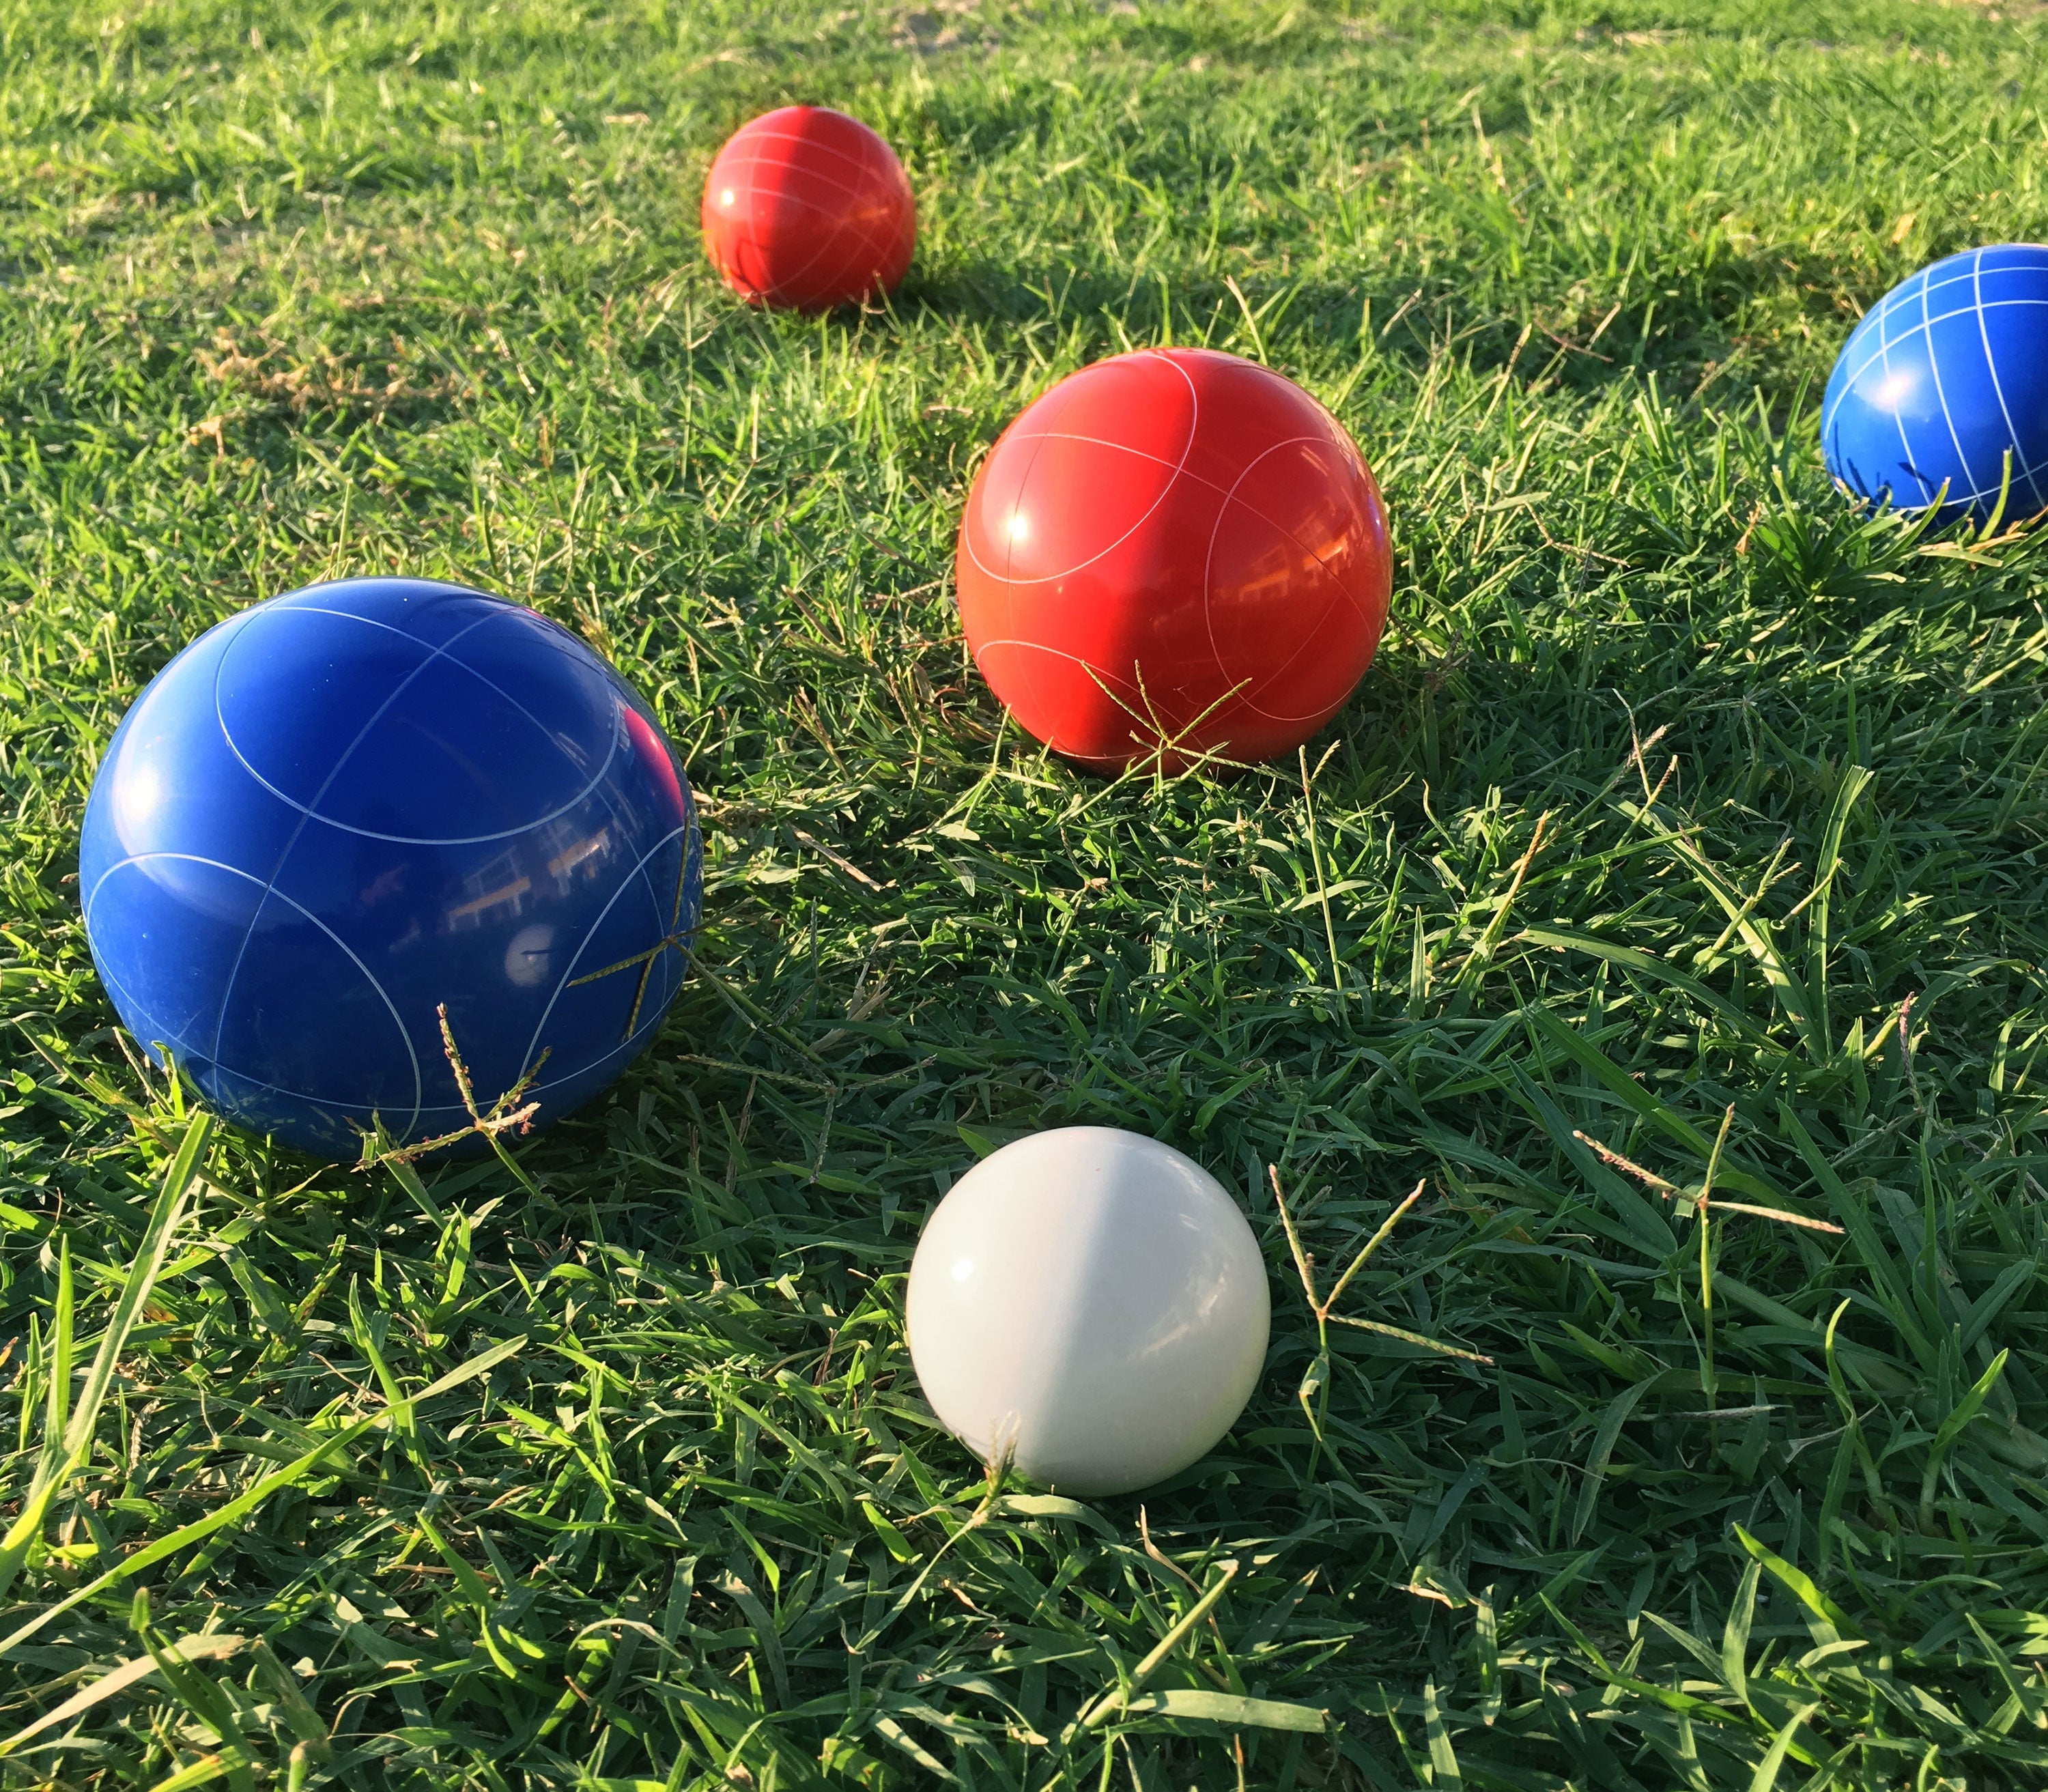 Yard Games Bocce Ball Premium 4 Color Set